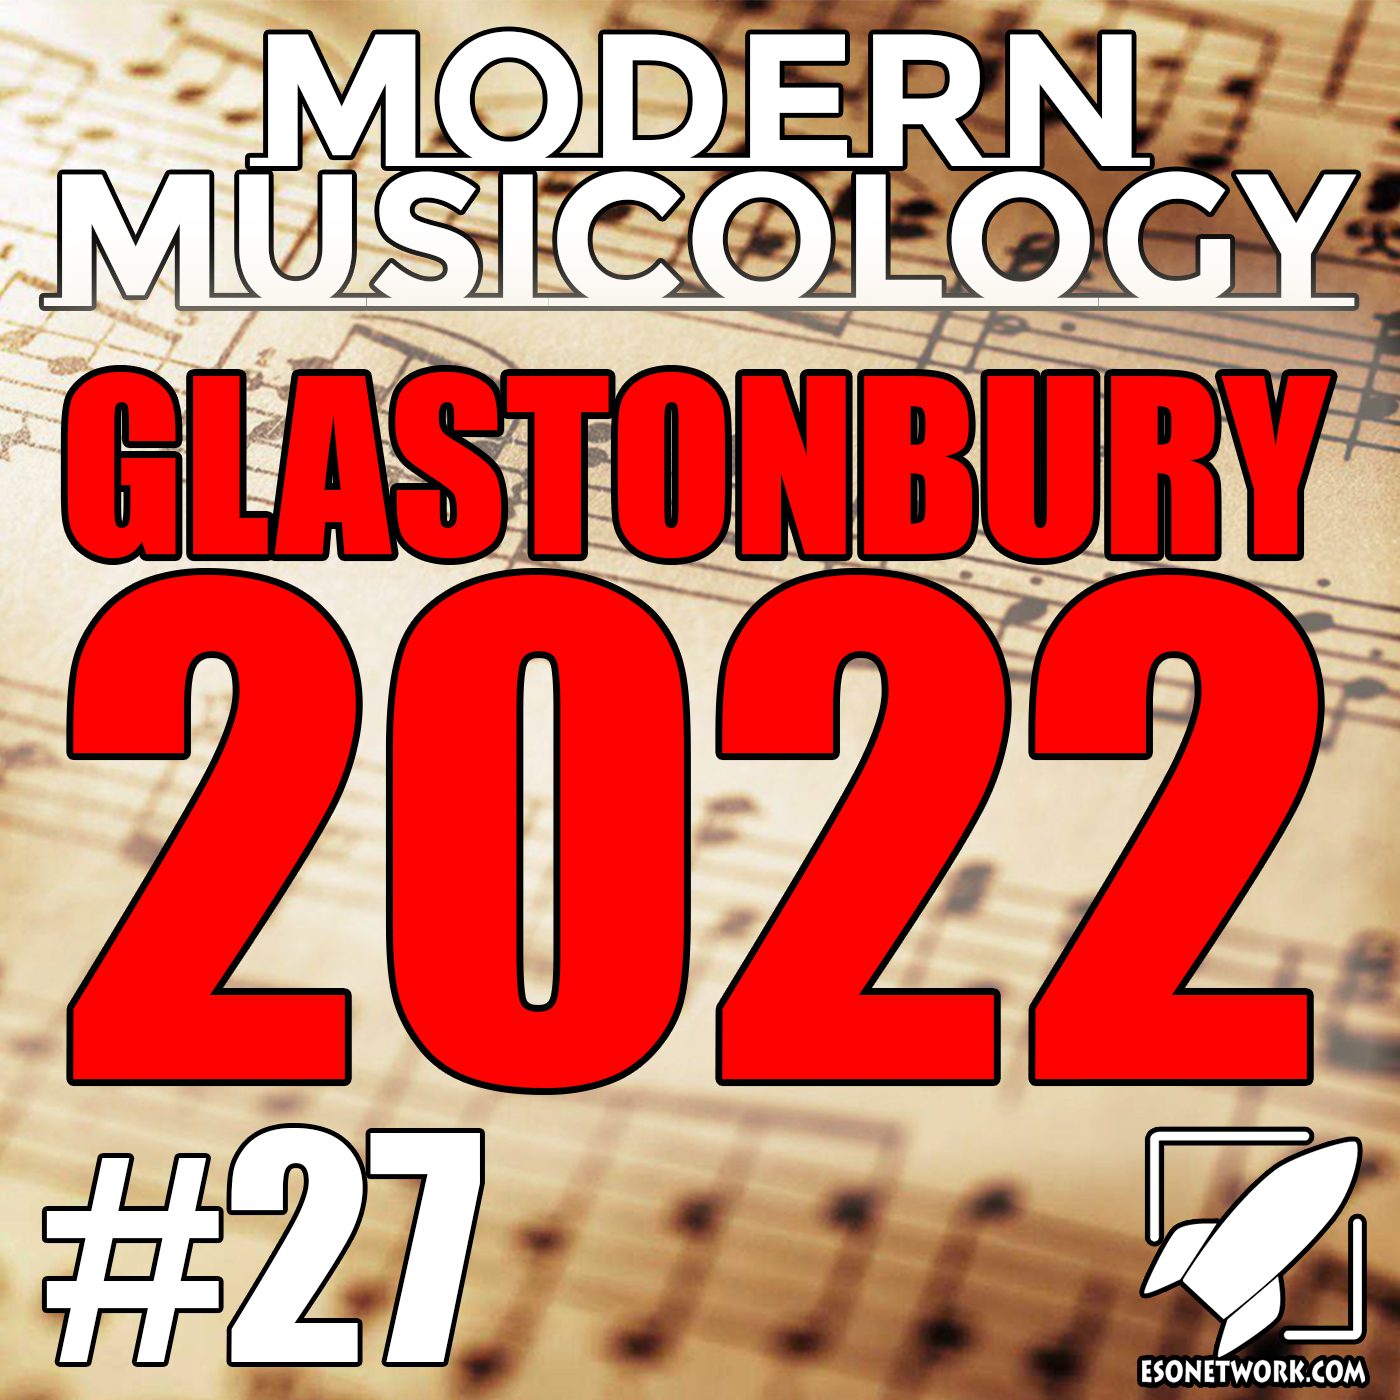 Modern Musicology #27 - Glastonbury 2022